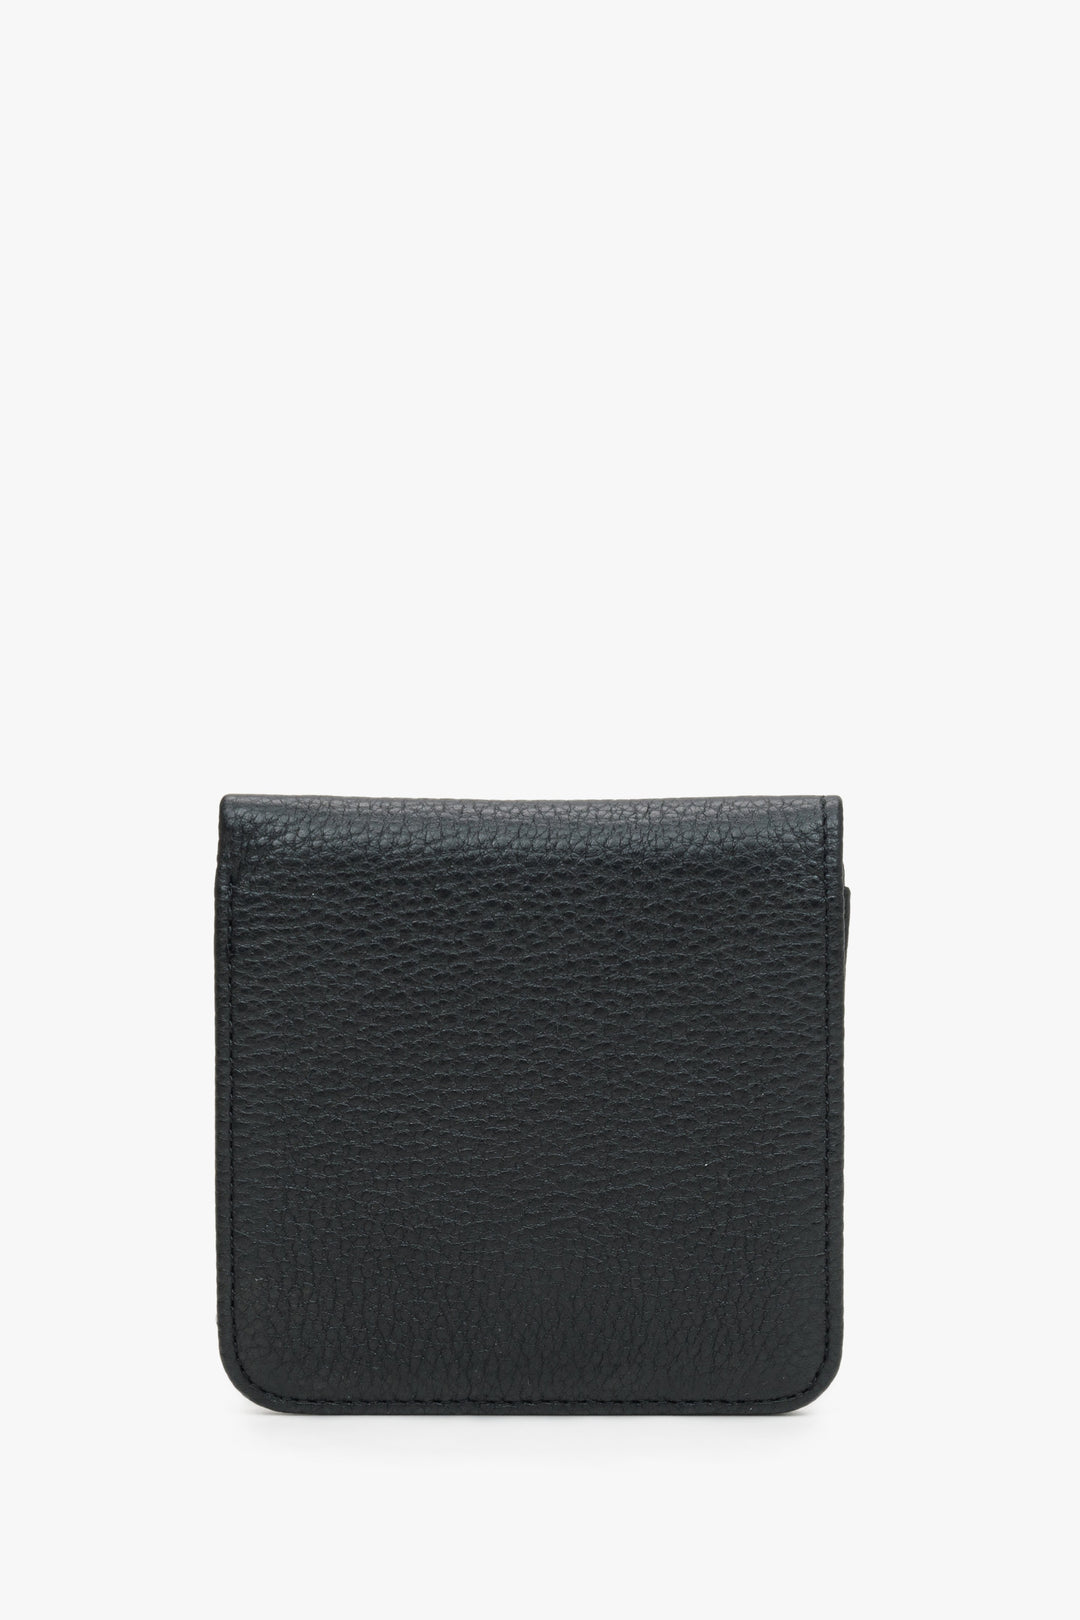  Estro men's  black billfold wallet - back view.